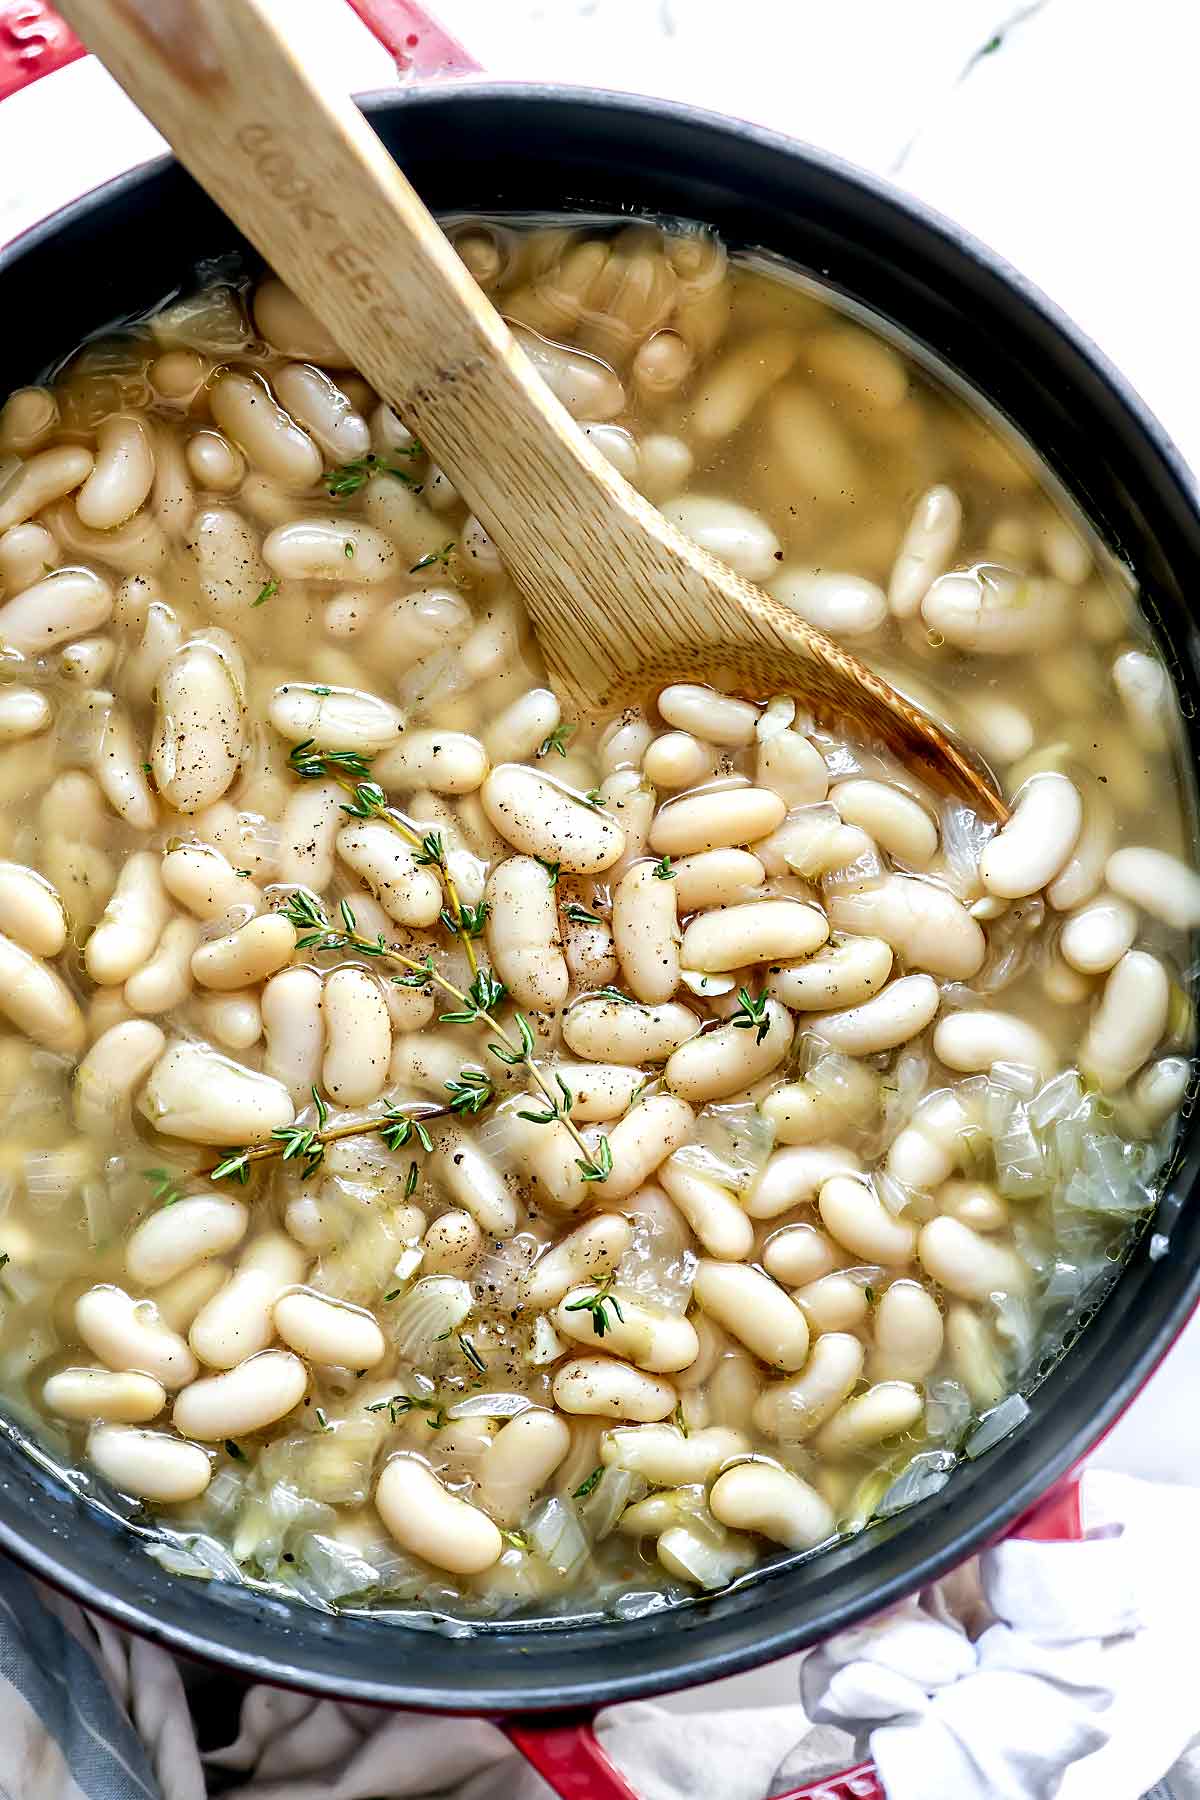 https://www.foodiecrush.com/wp-content/uploads/2020/08/Stewed-Cannellini-Beans-foodiecrush.com-020.jpg